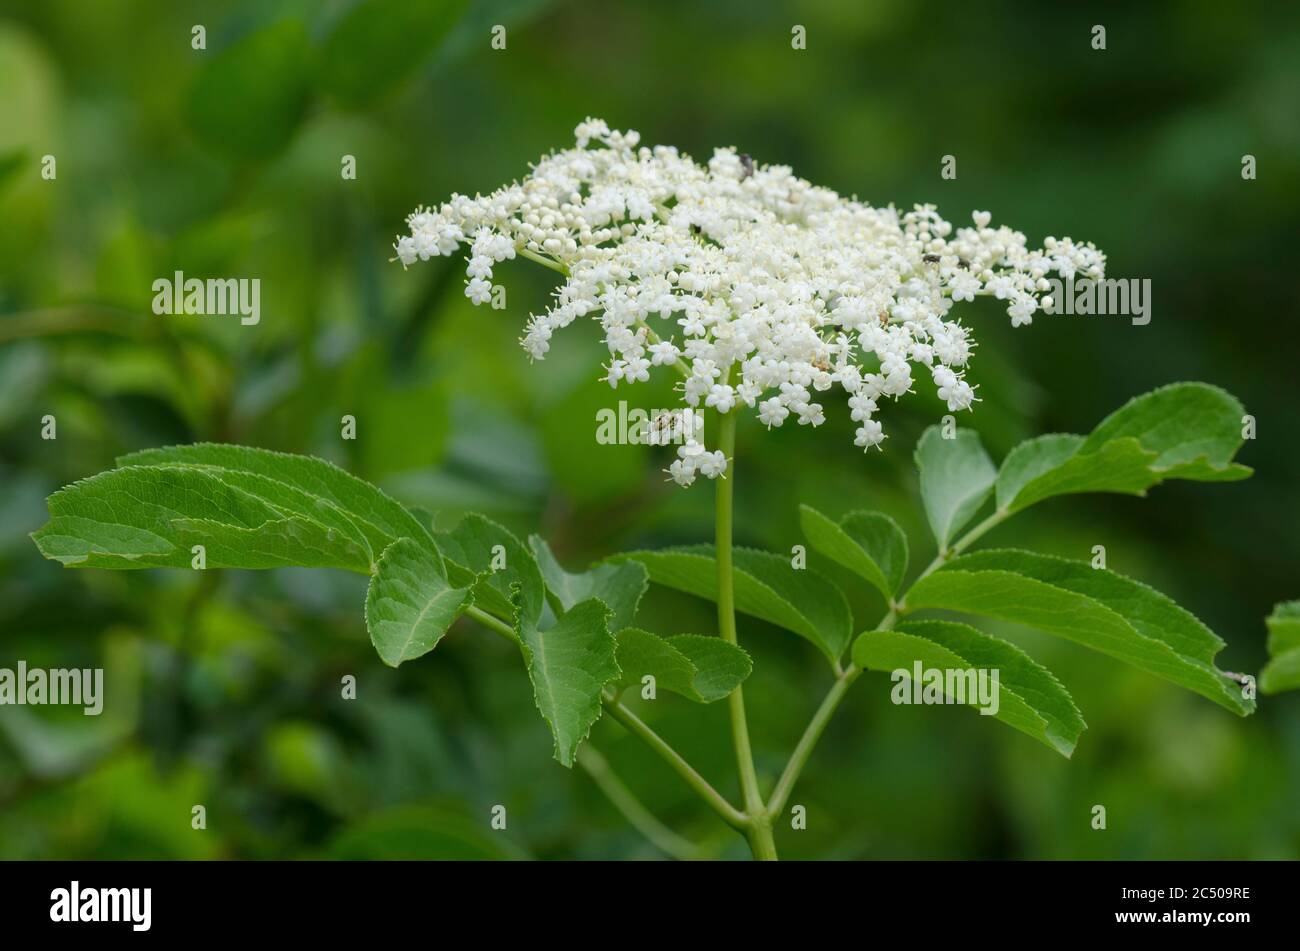 American Black Elderberry, Sambucus canadensis Stock Photo - Alamy